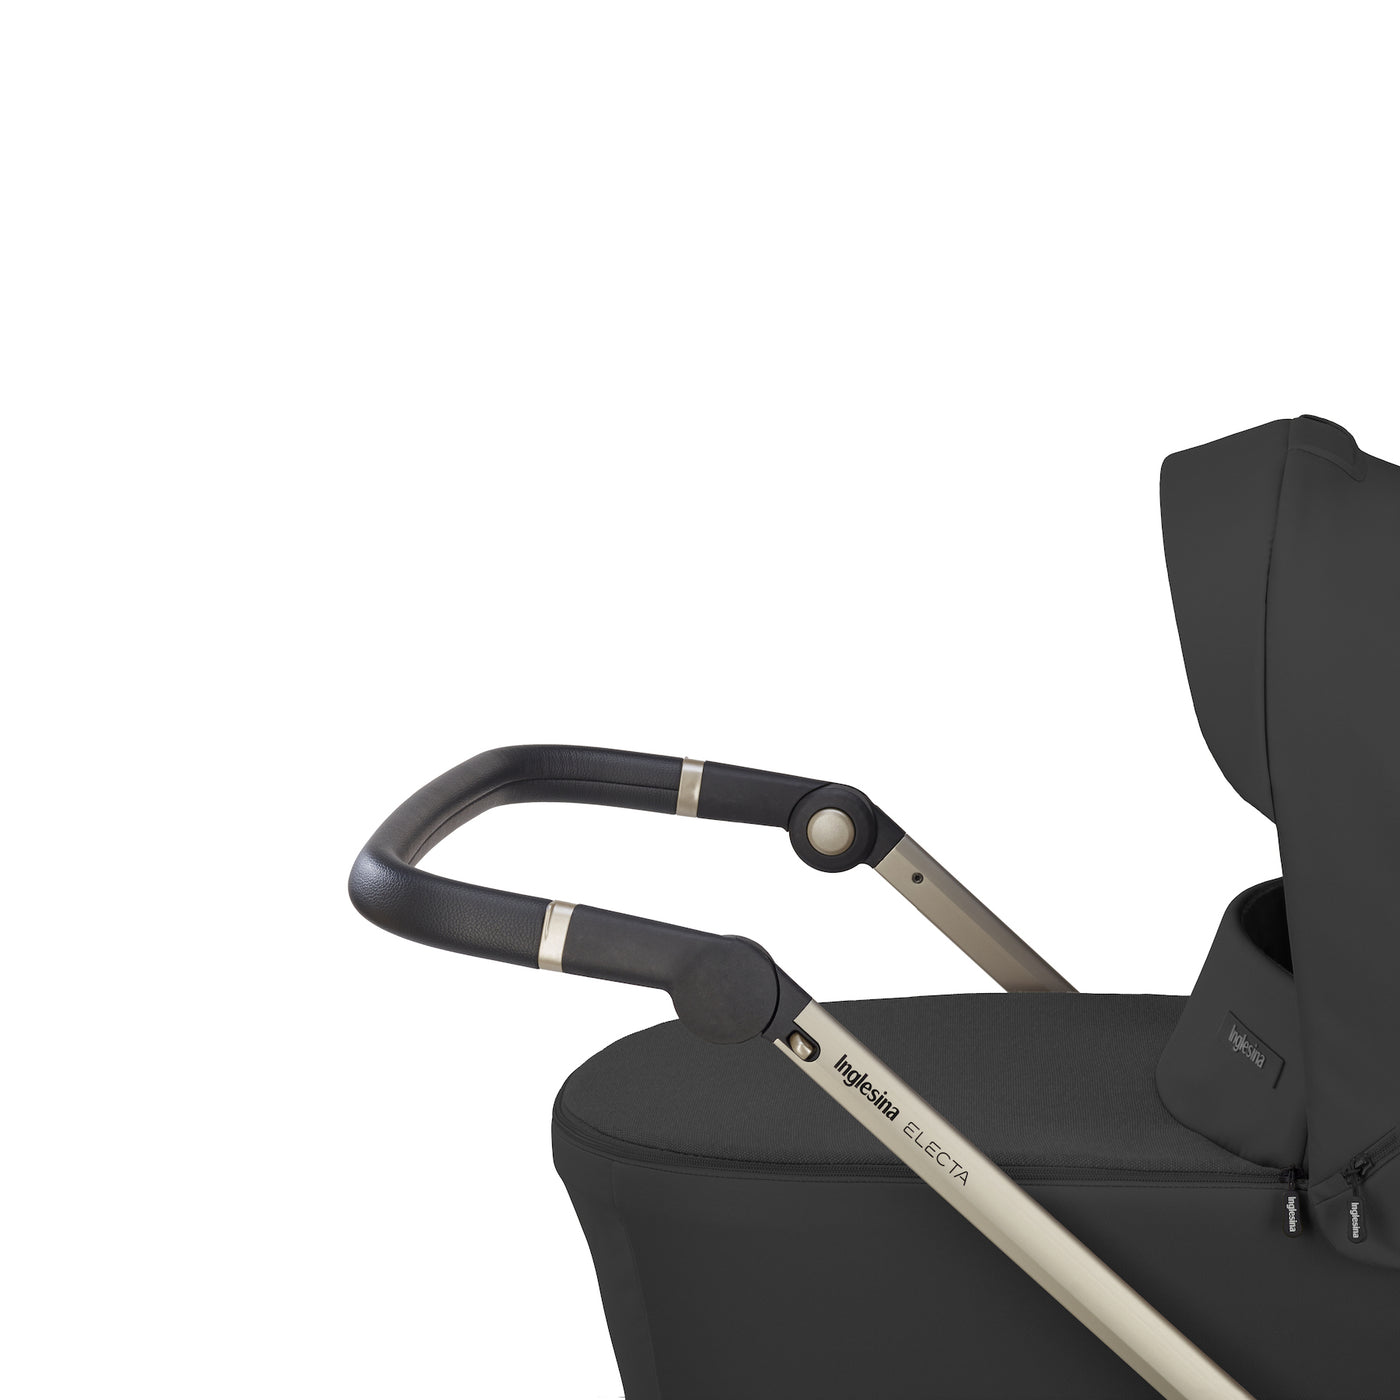 Inglesina Electa stroller frame upper black with adjustable handle for petit and tall parents alike, 4 position adjustable handle